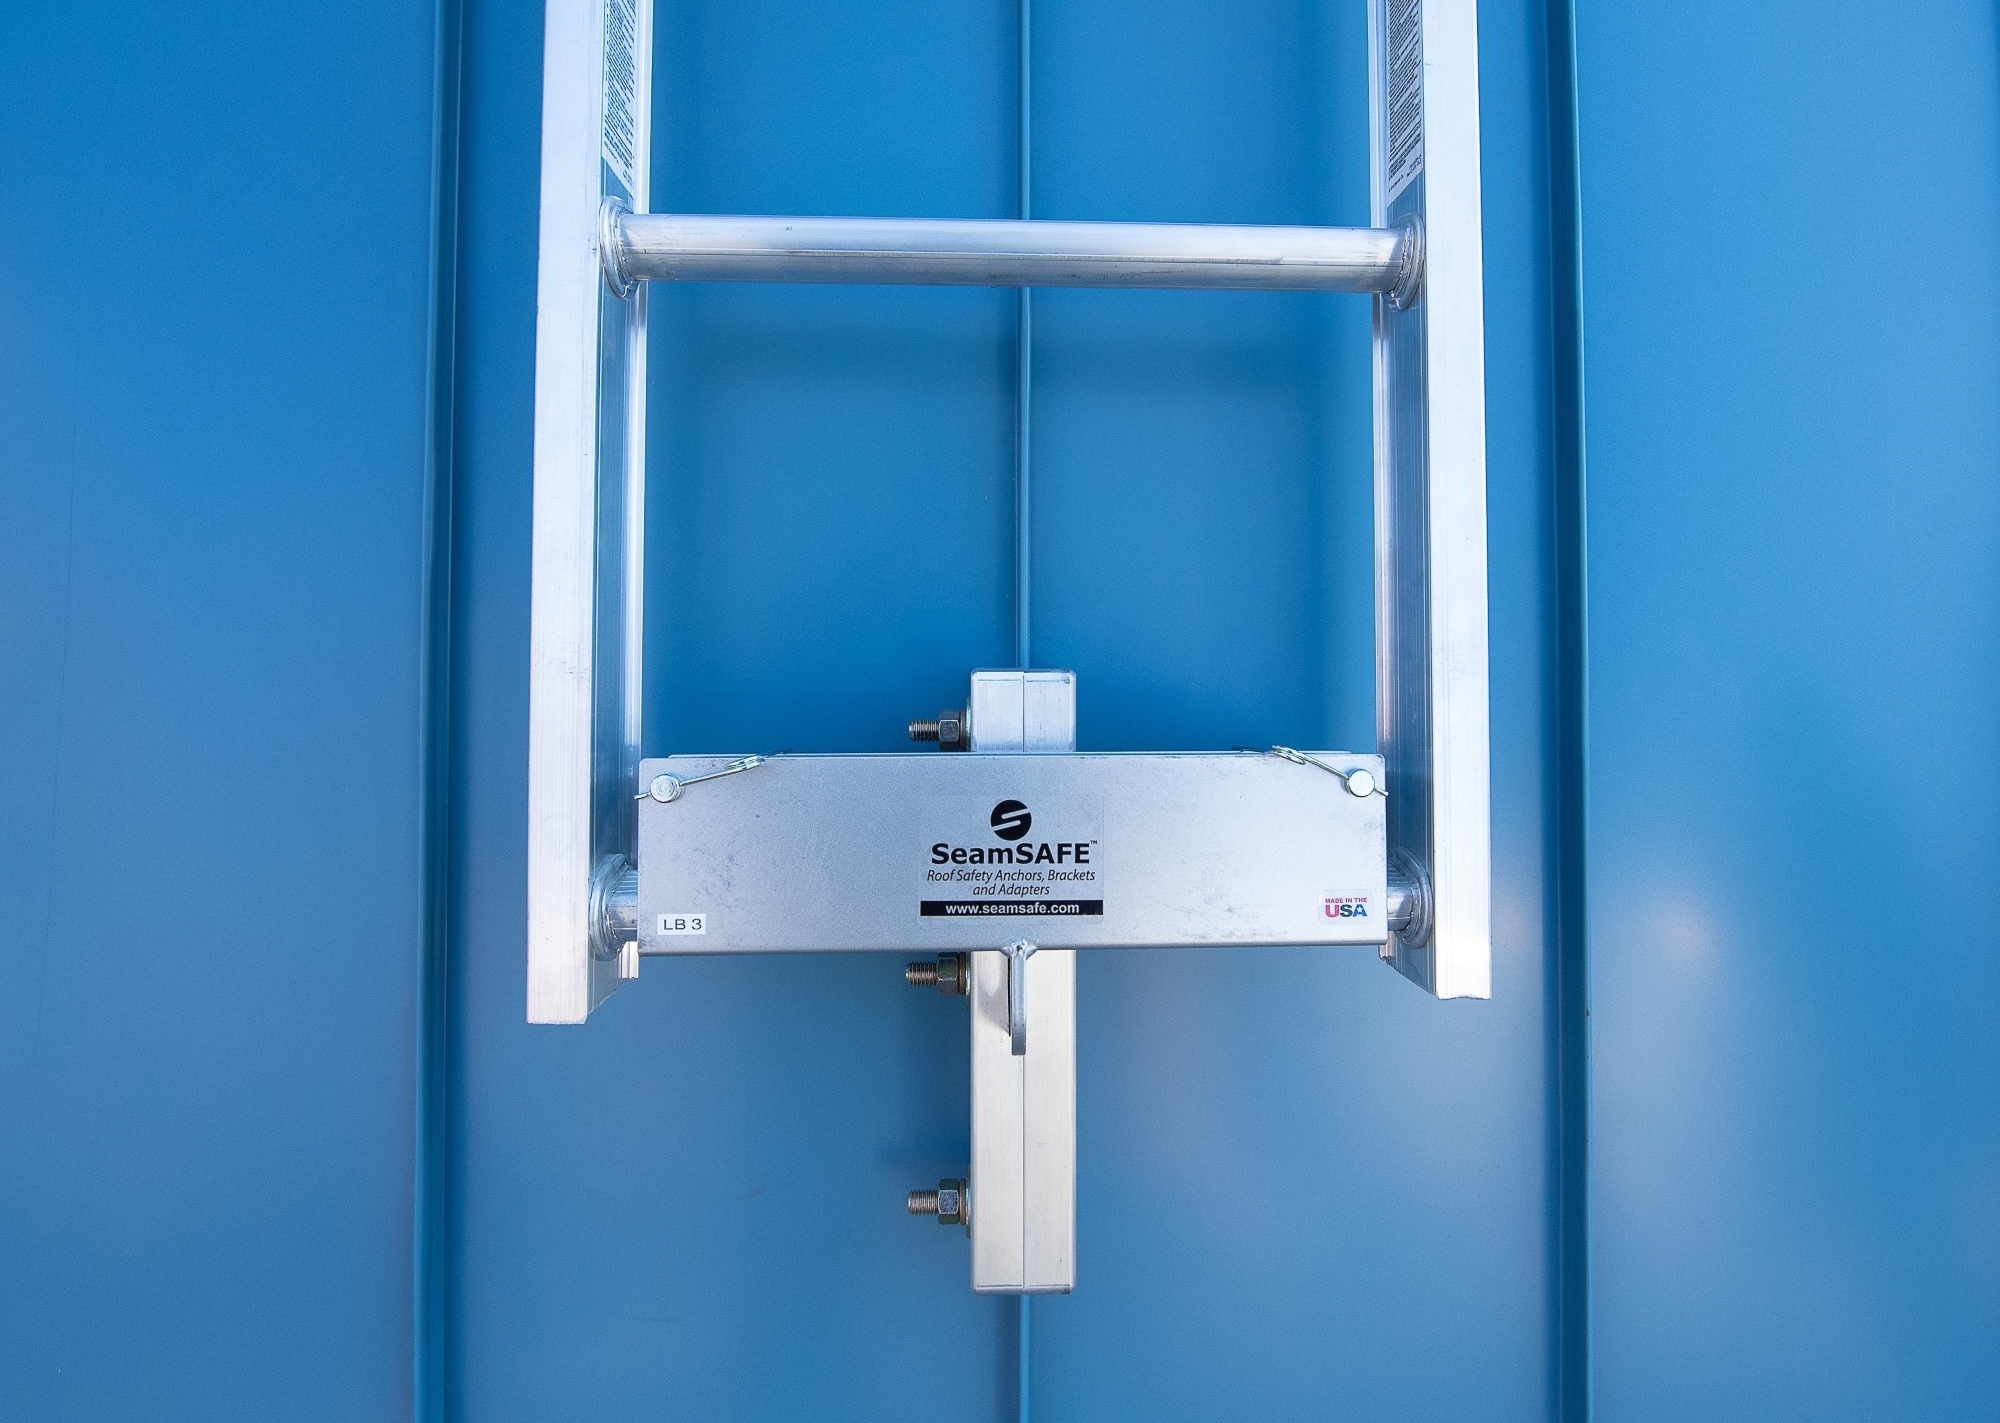 SeamSAFE ladder attachment